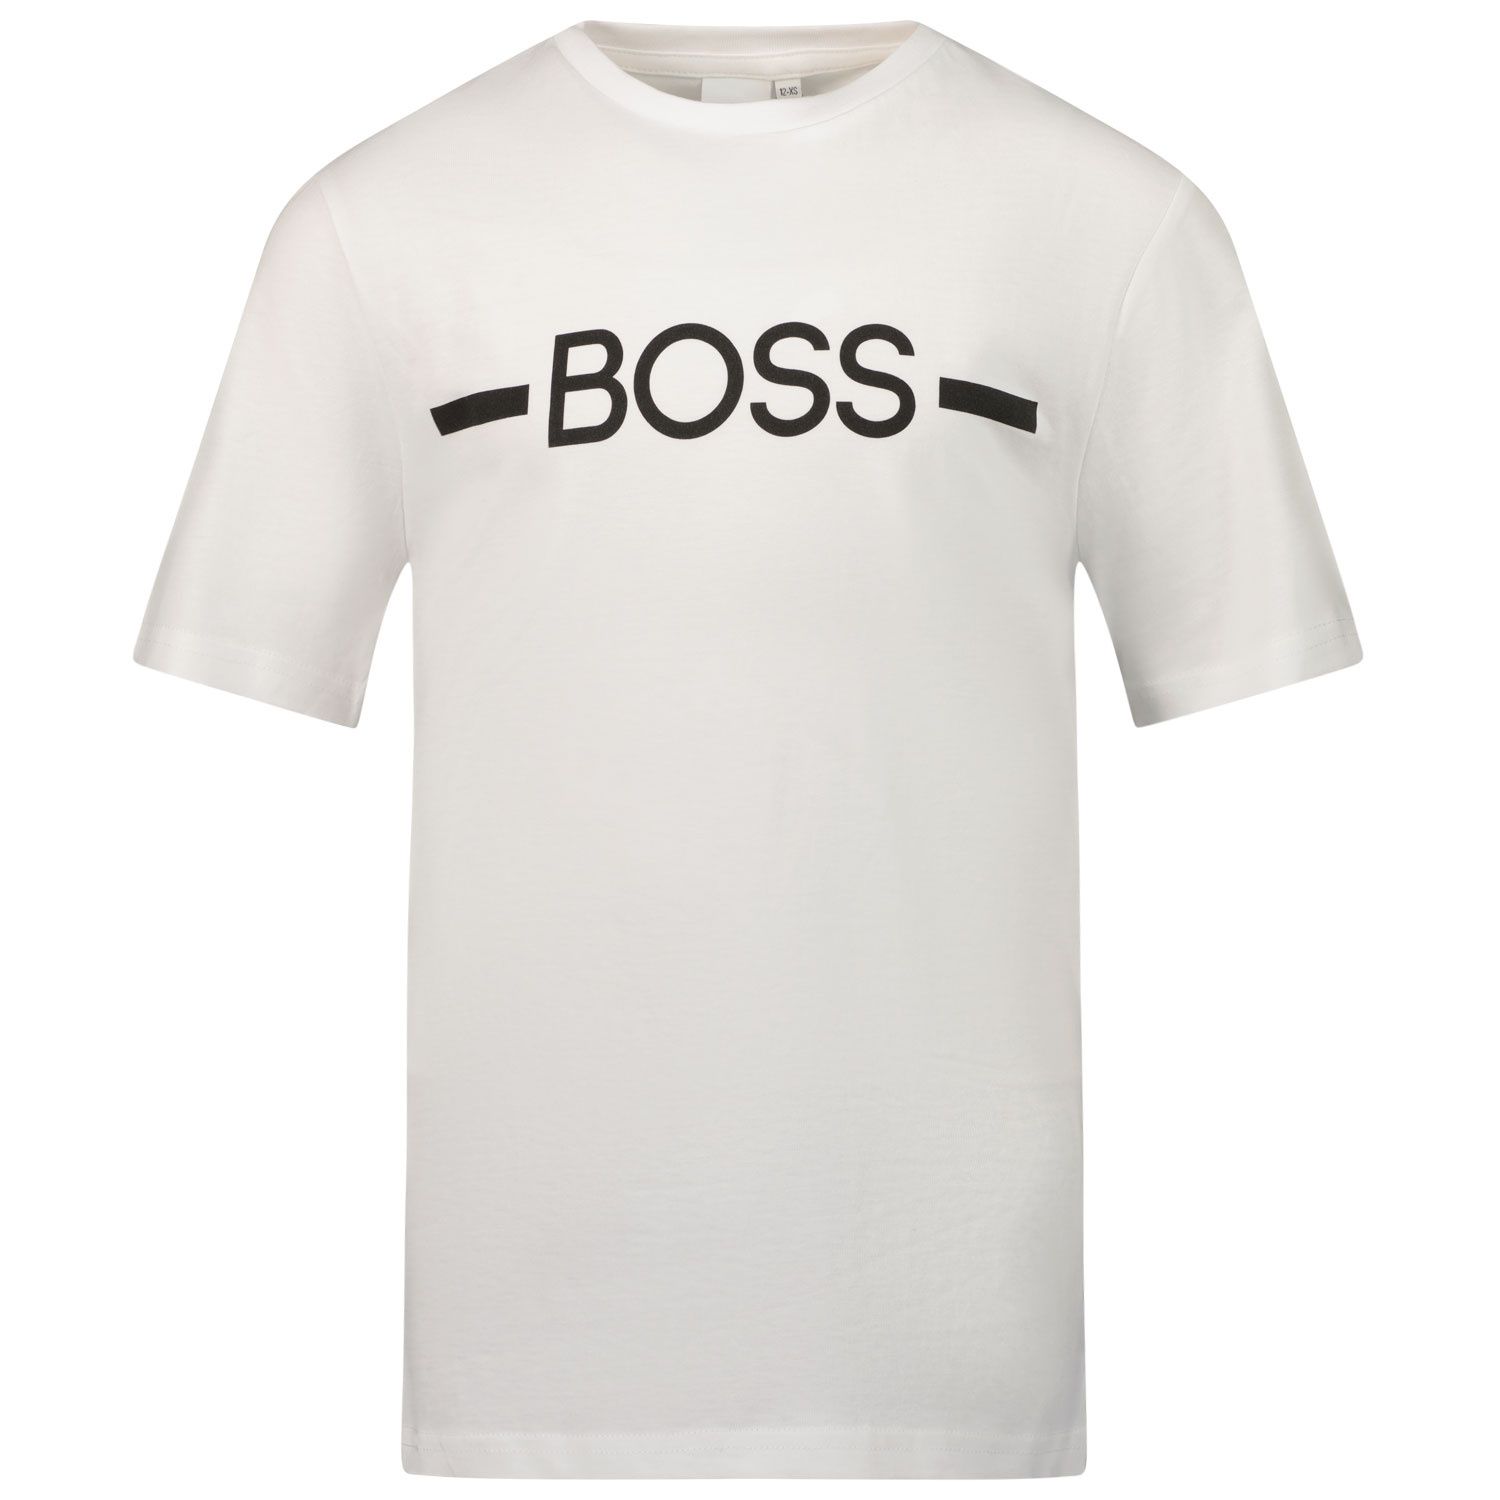 Picture of Boss J25N29 kids t-shirt white